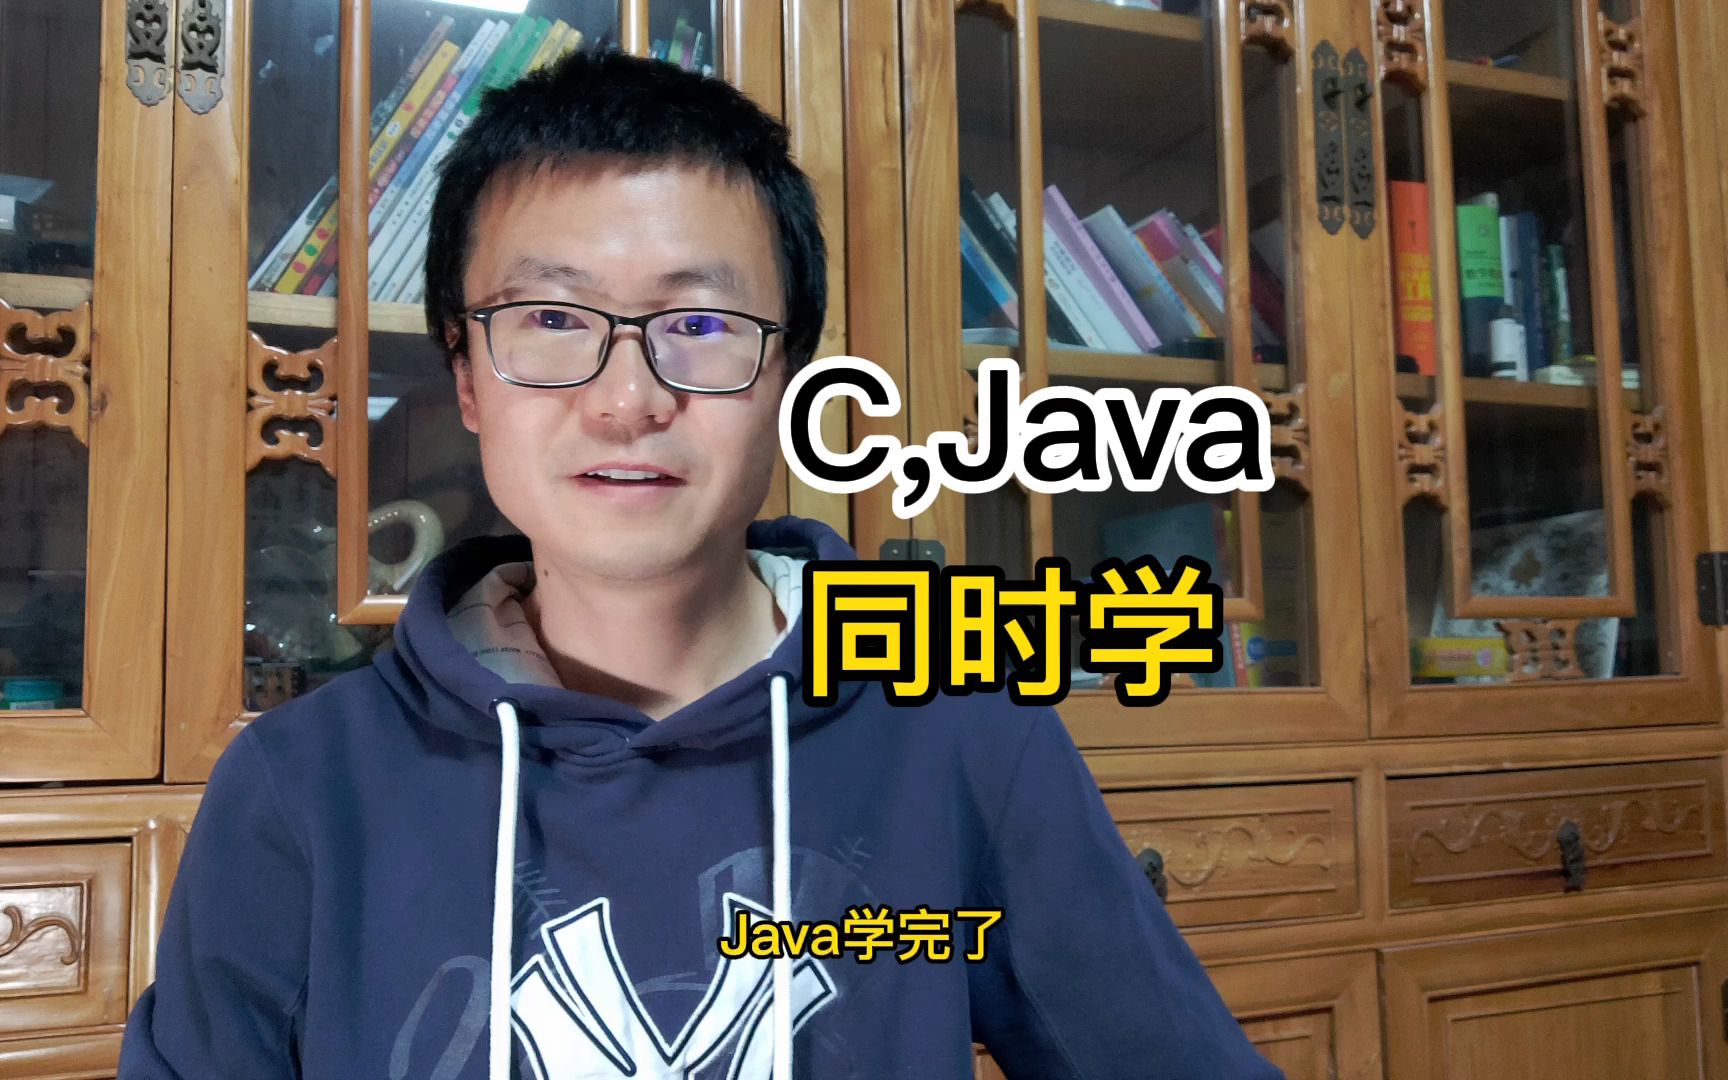 C语言和Java等同时学习合适吗